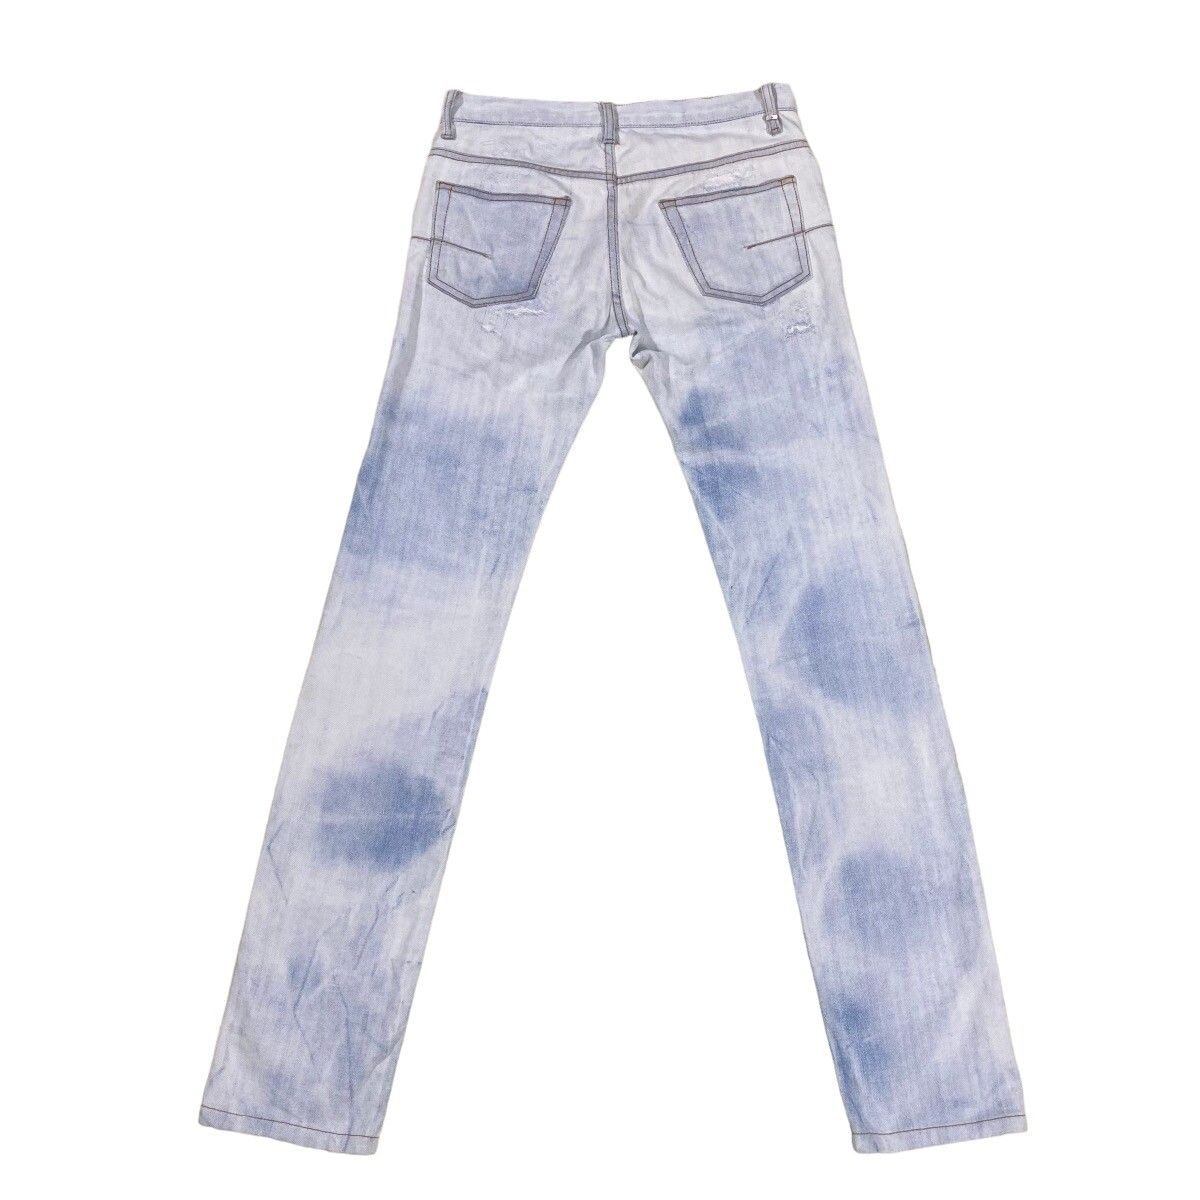 Dior Homme SS06 Dirty Snow Denim Jeans - 15